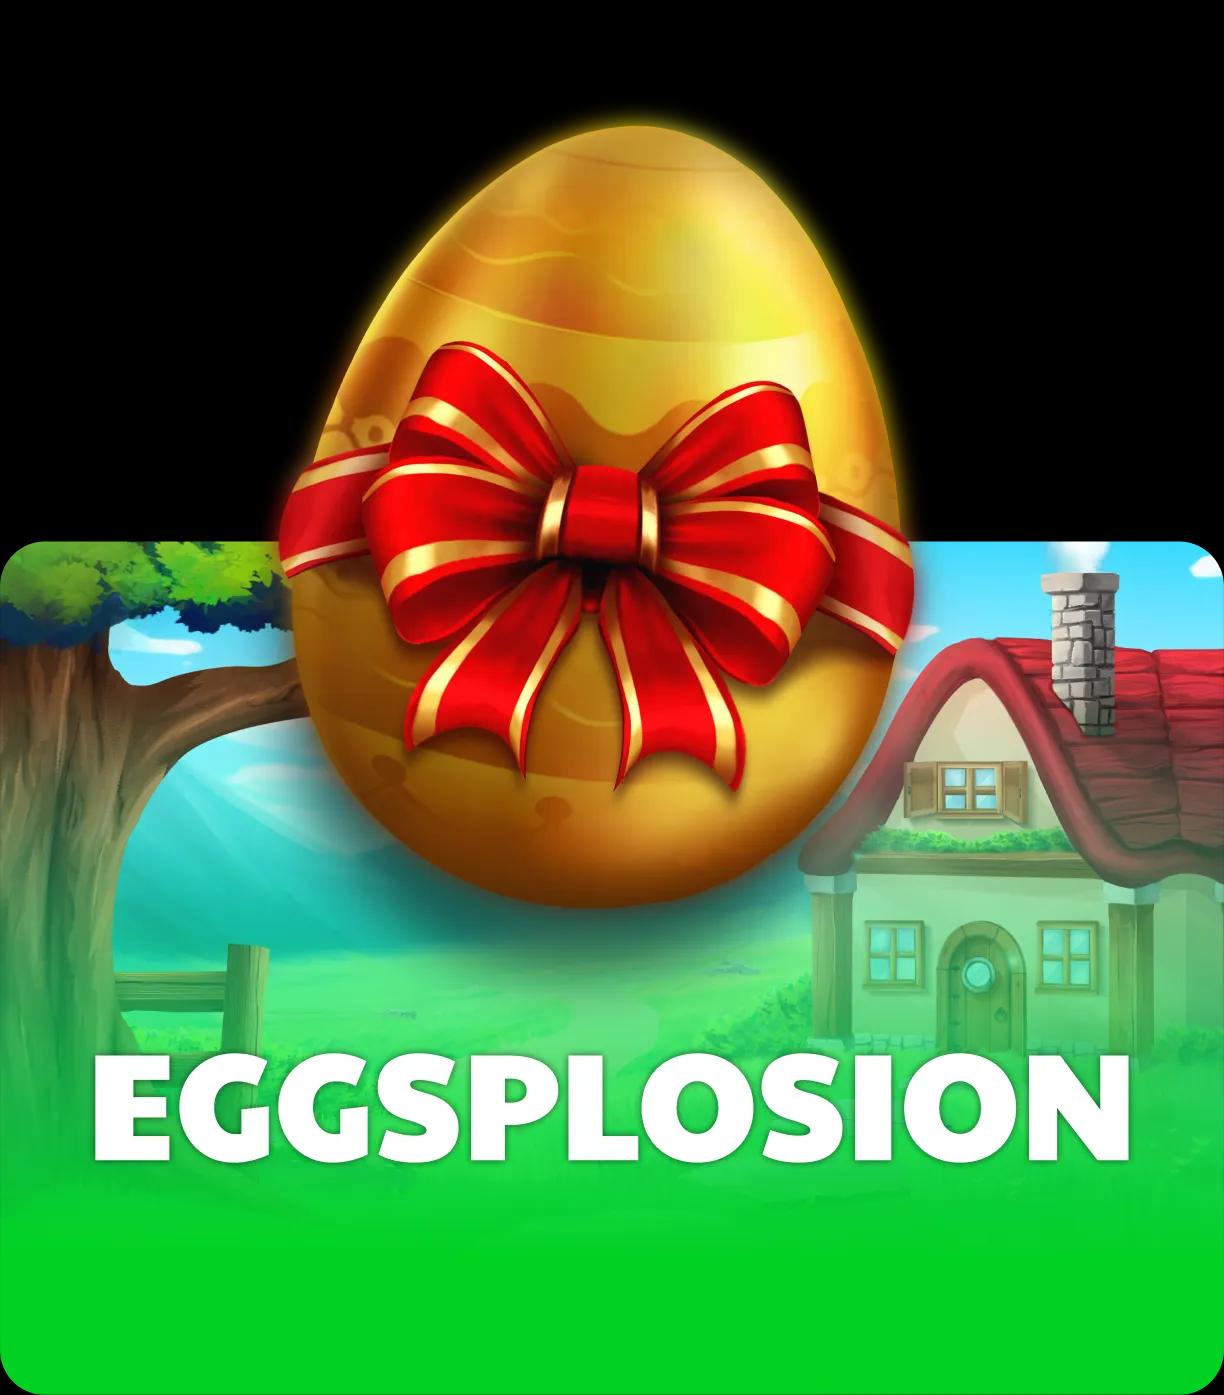 dg_Eggsplosion_square.webp